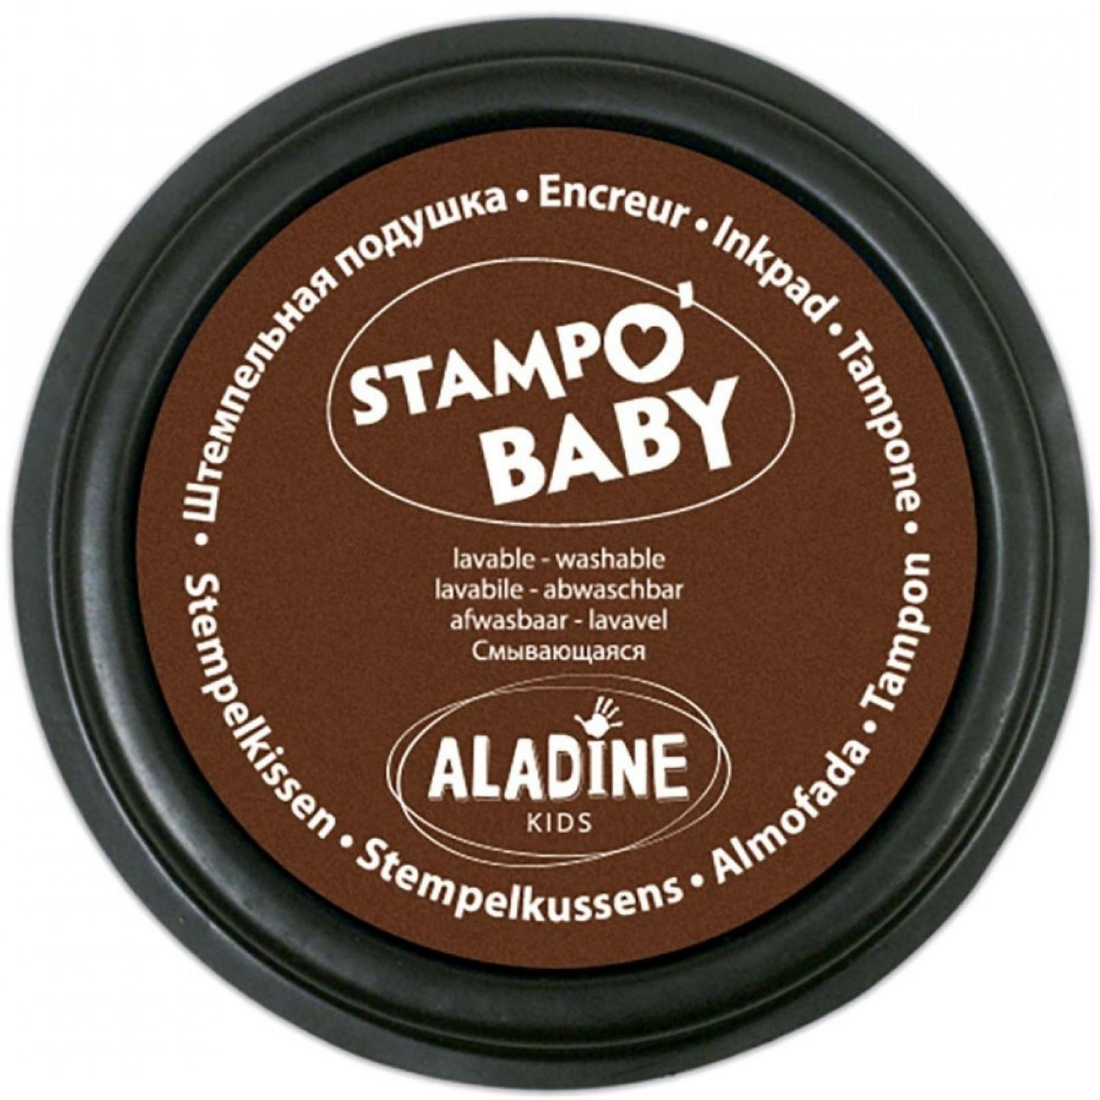 Almofada de Carimbo Stampo Baby Dark Brown aladine